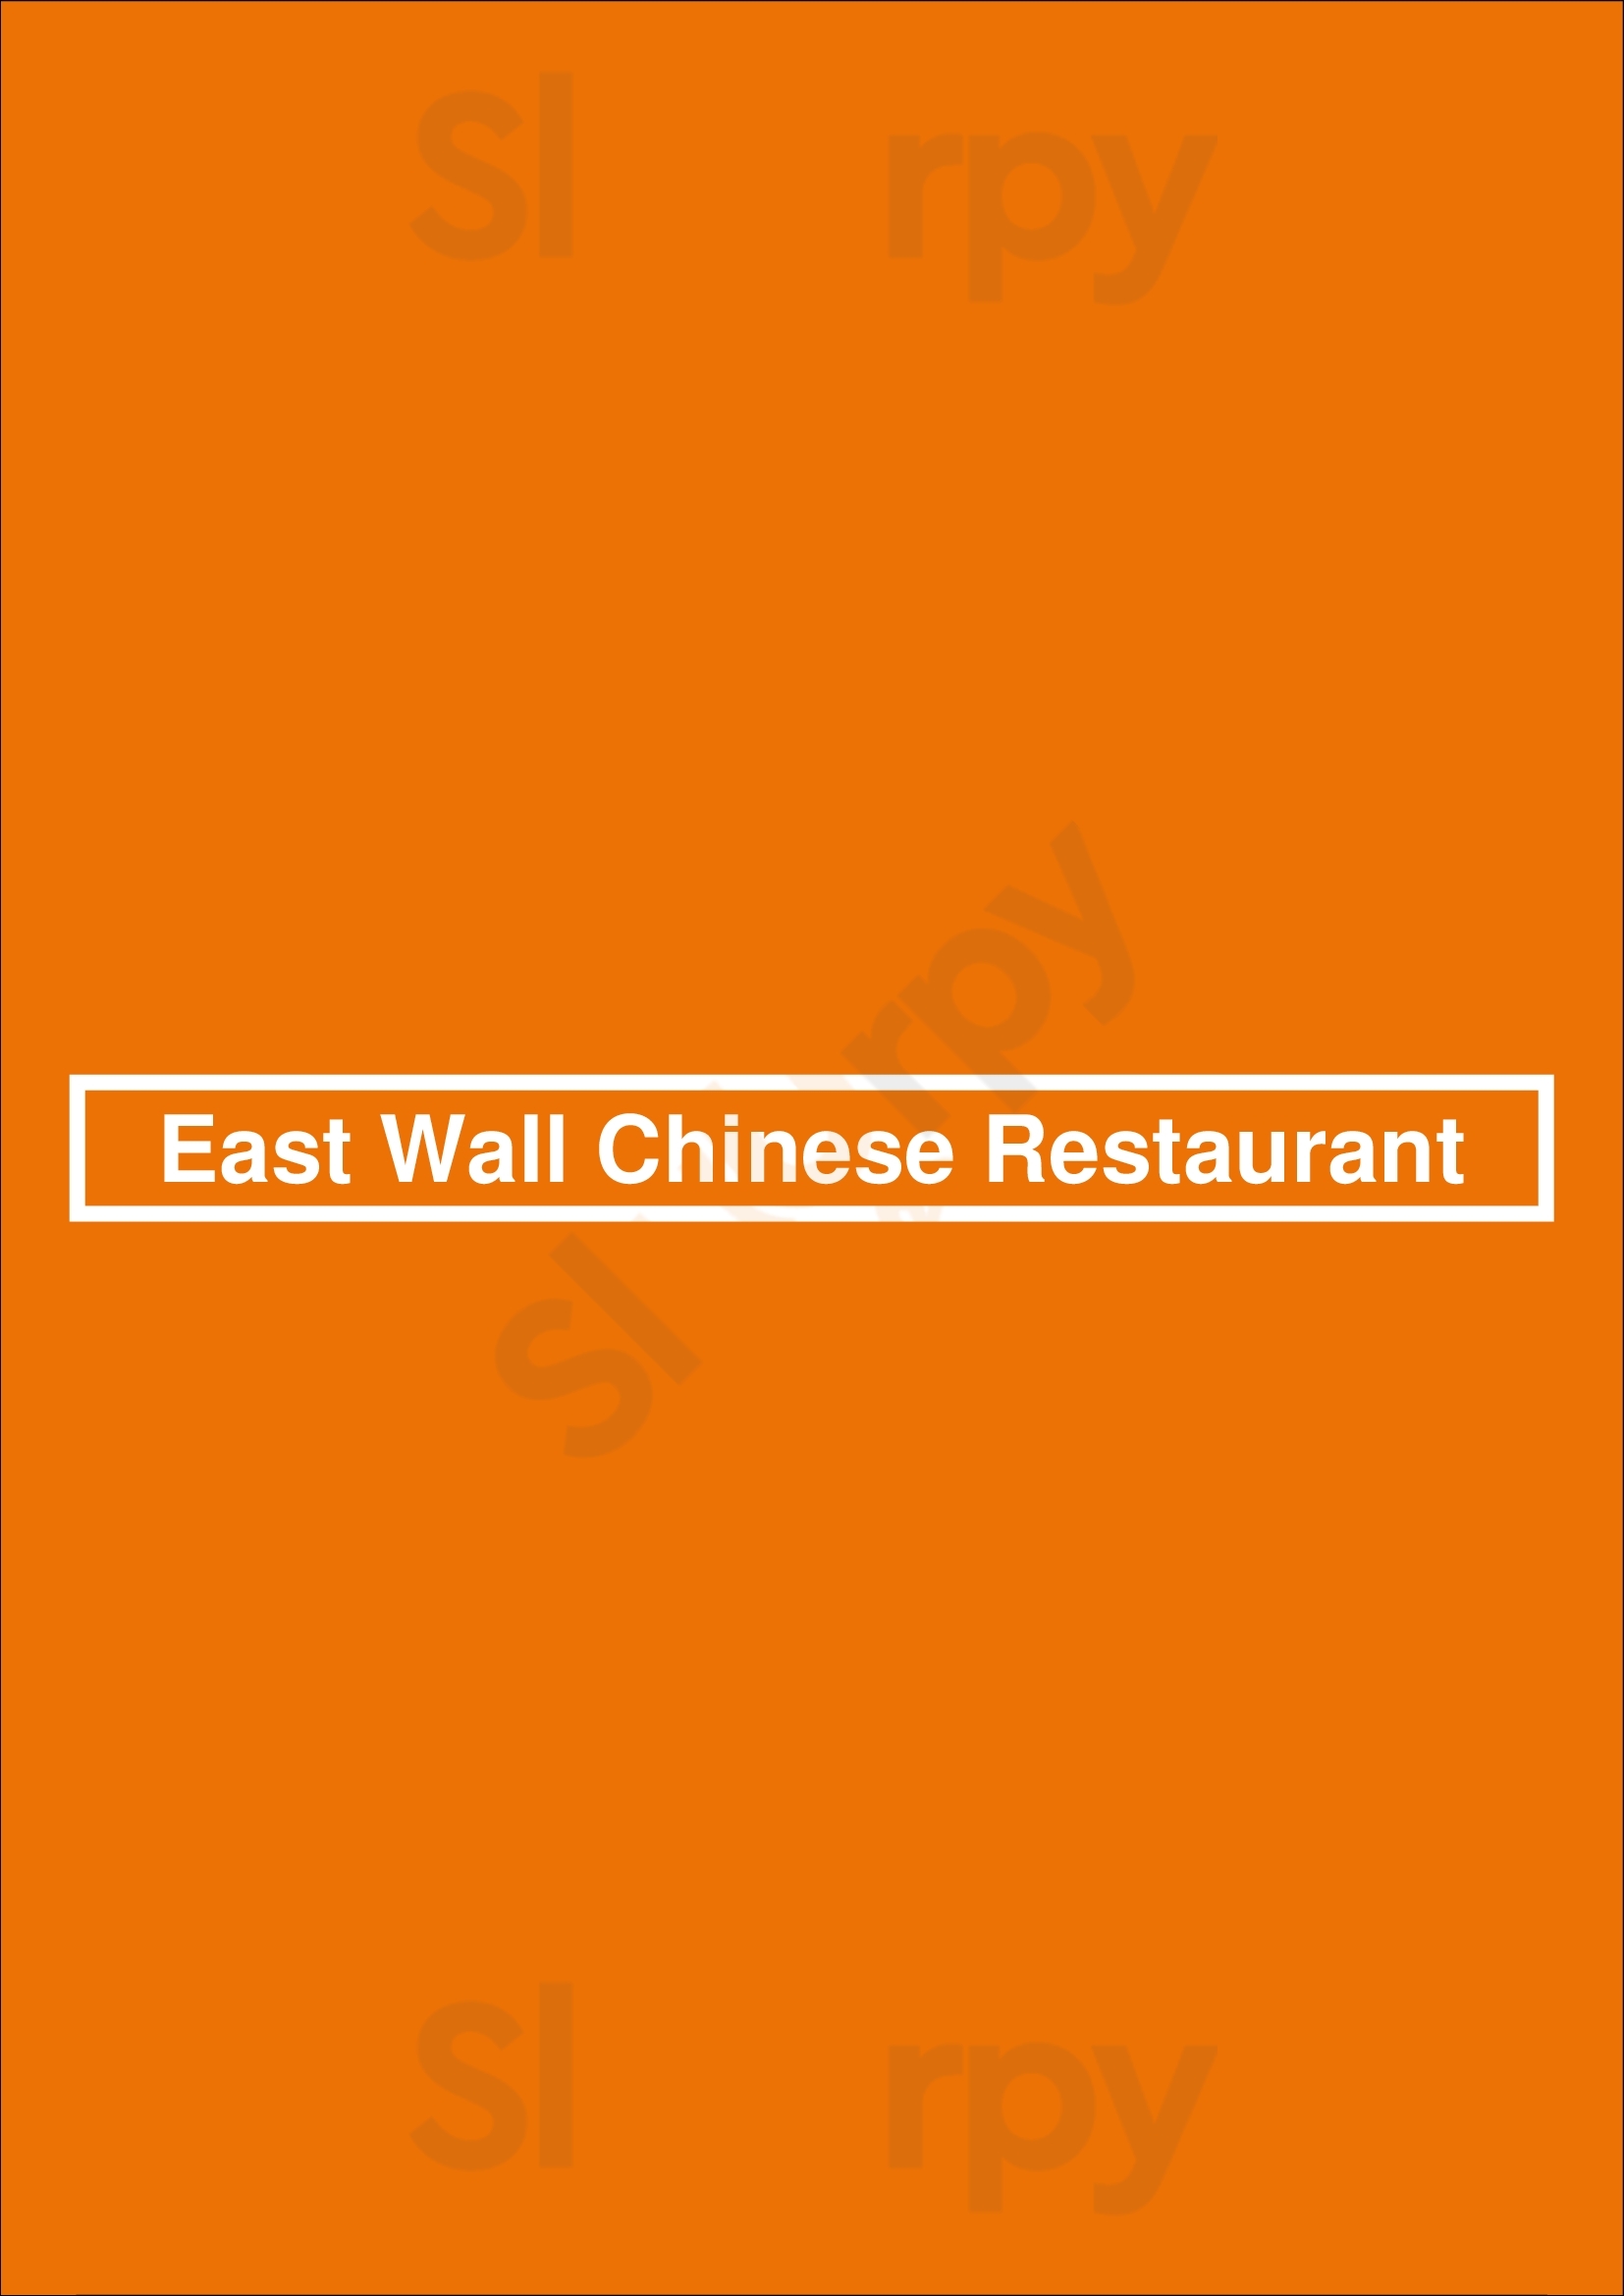 East Wall Chinese Restaurant Houston Menu - 1